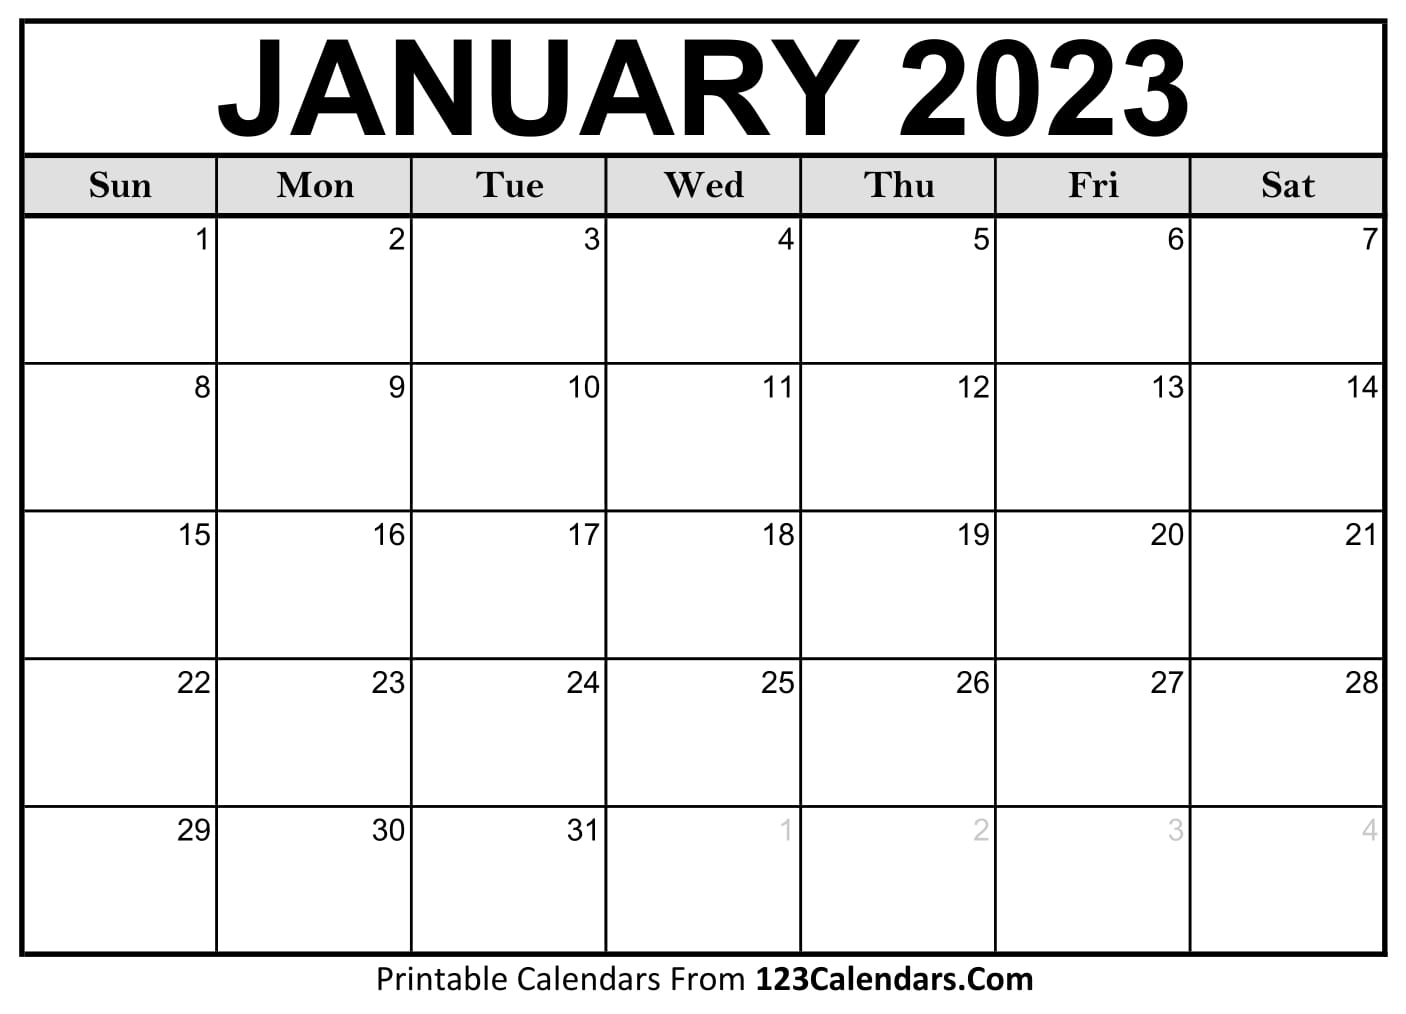 january 2023 calendar free printable calendar january 2023 calendar